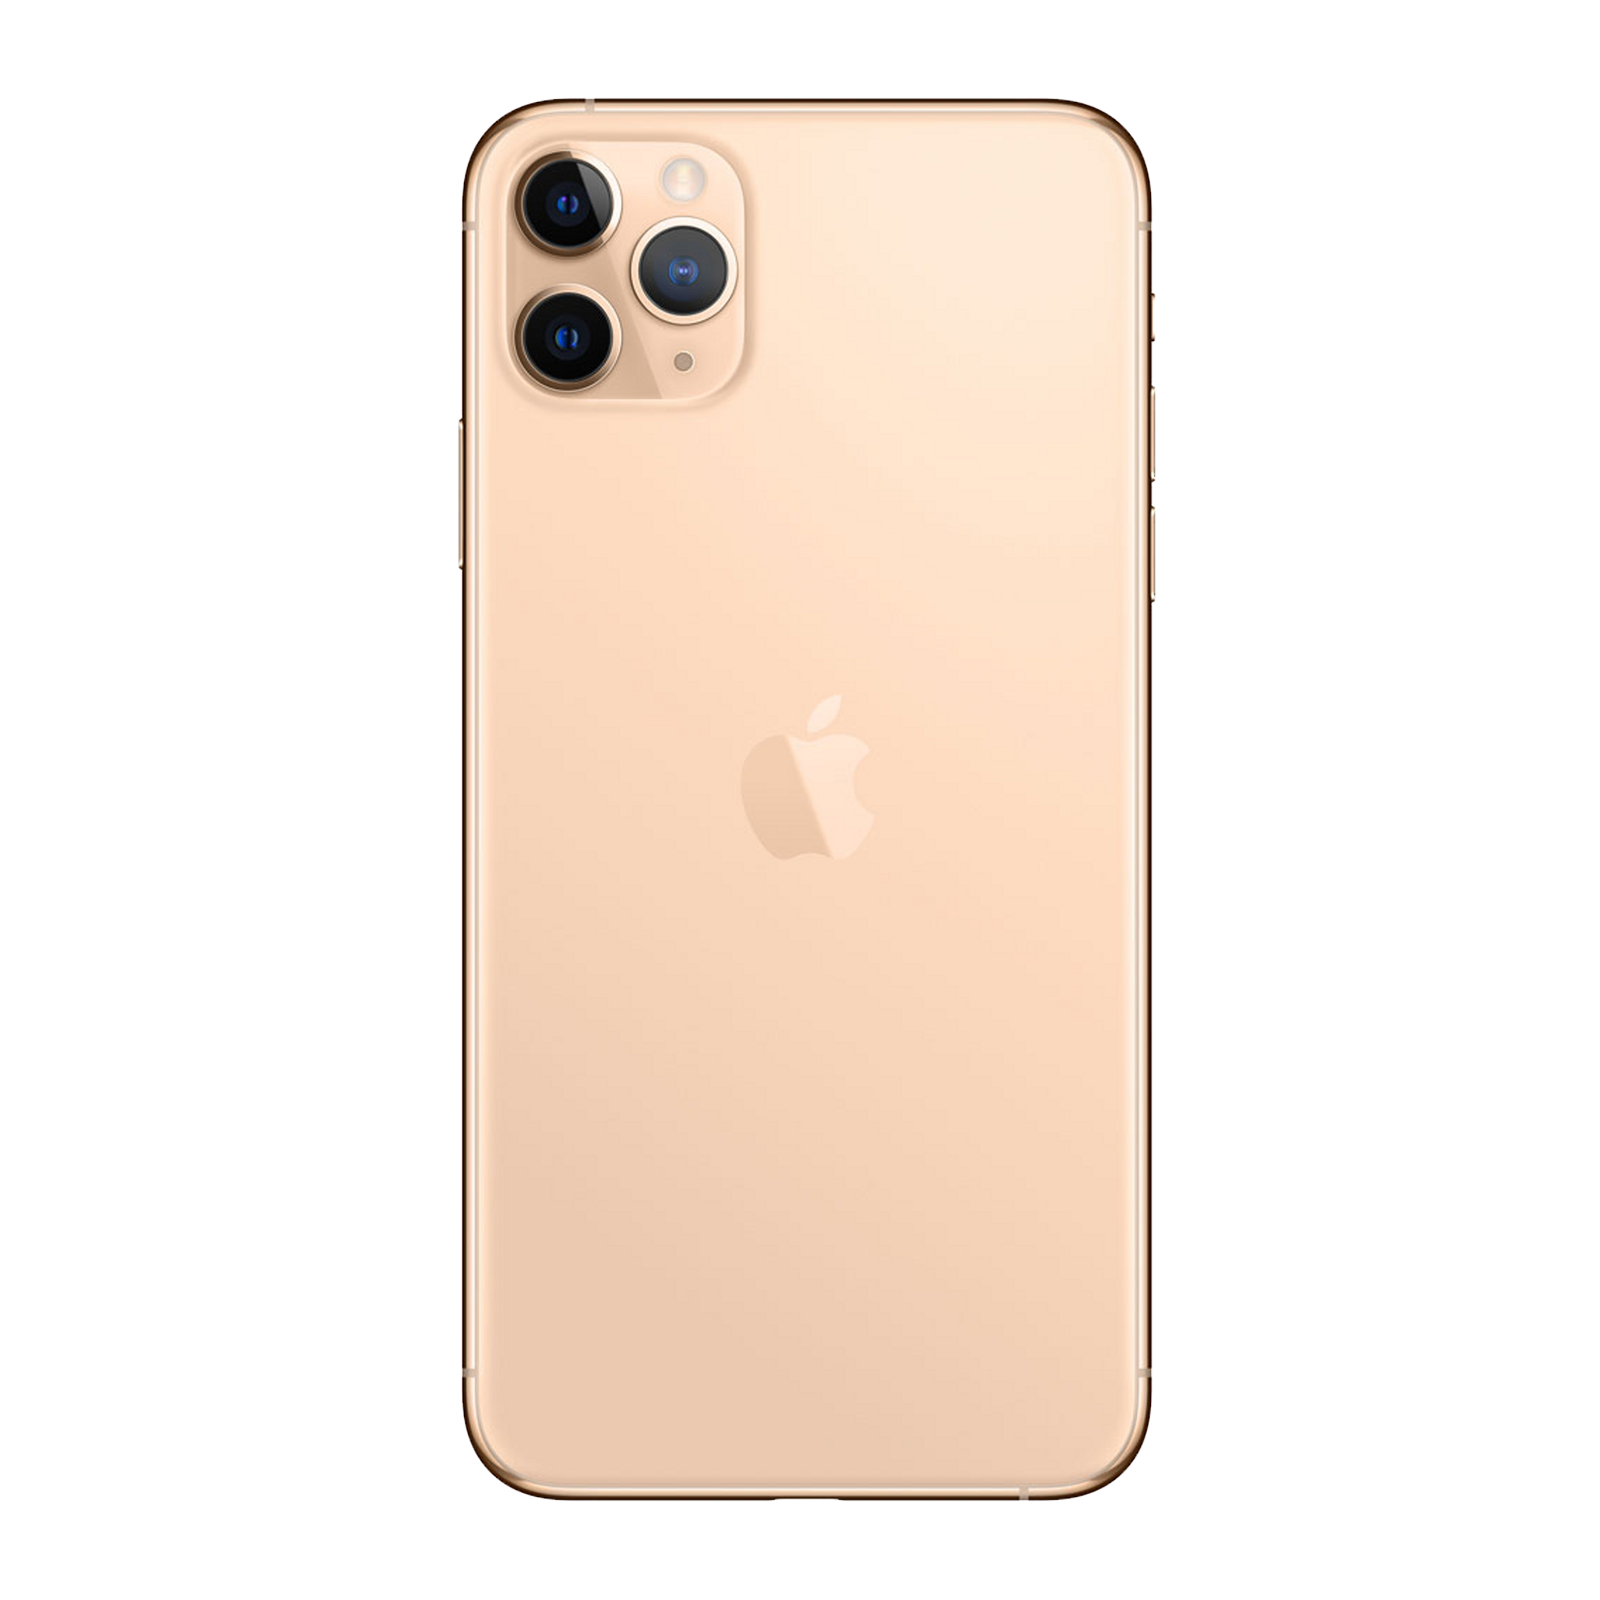 Apple iPhone 11 Pro 512GB Gold Good - Unlocked